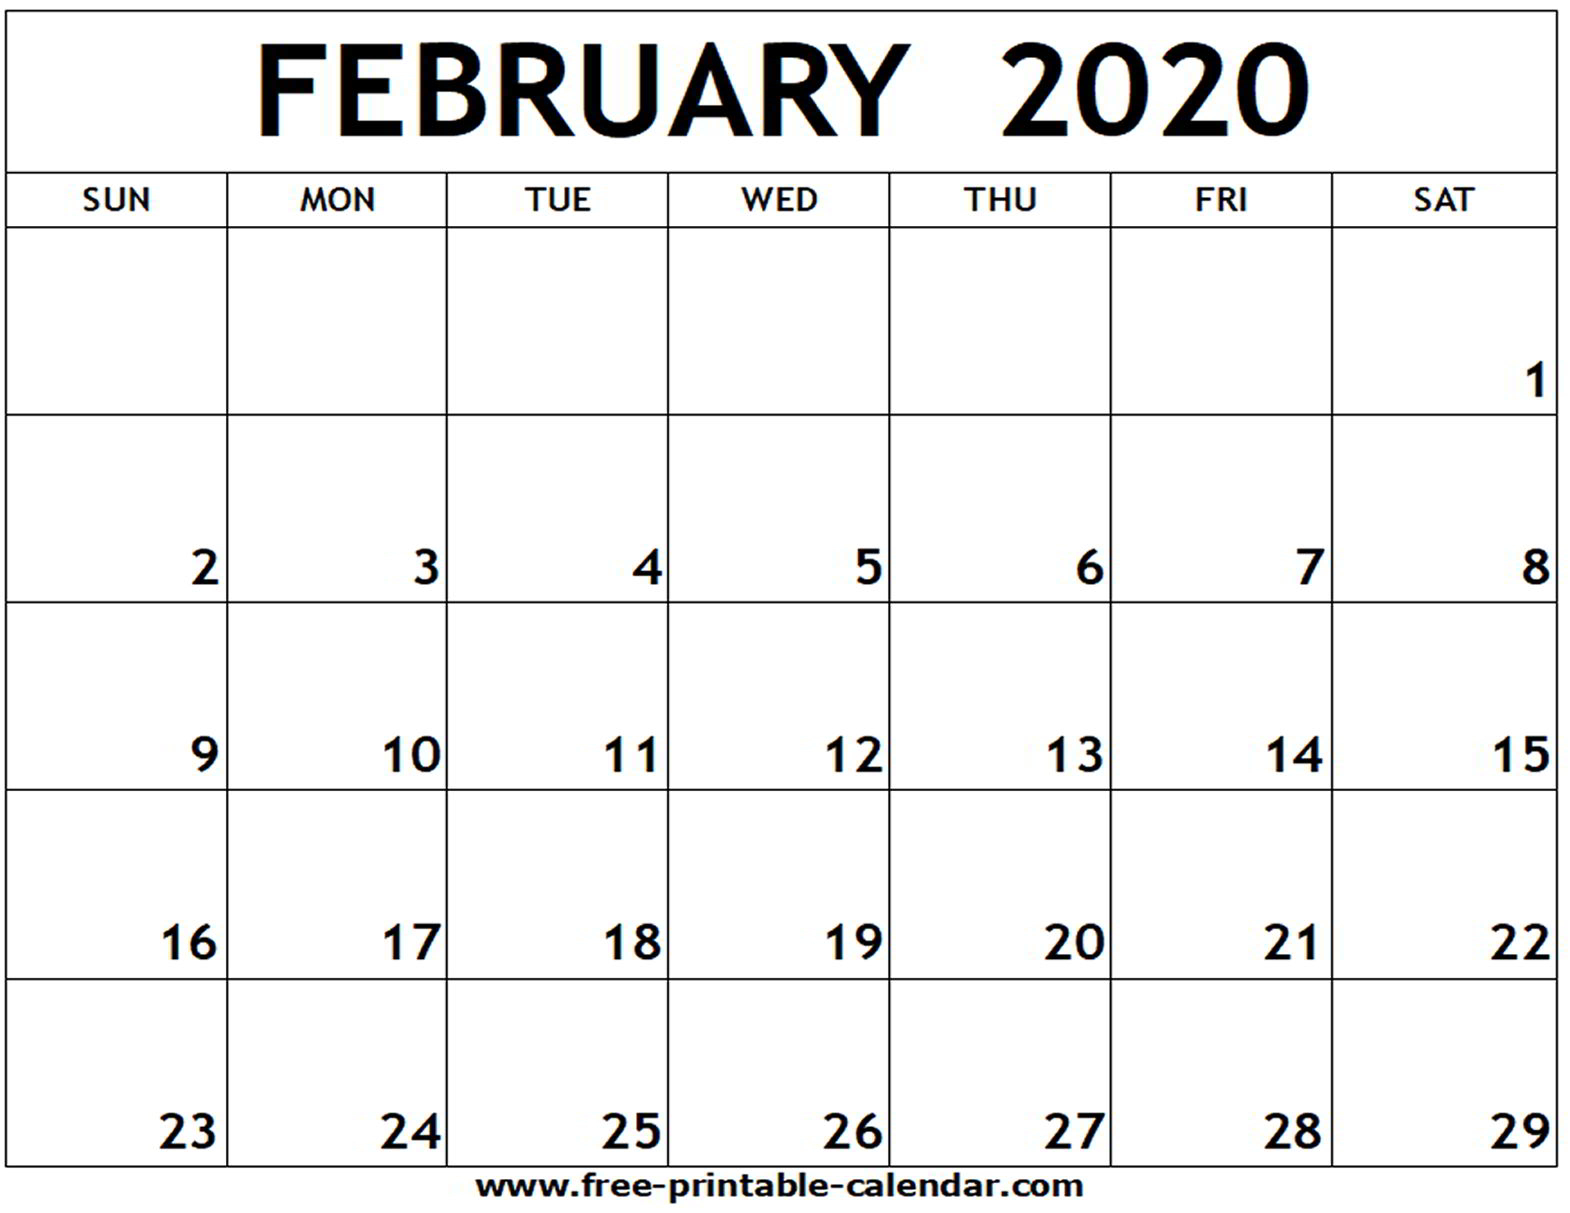 Free Printable February Calendar 2020 - Togo.wpart.co